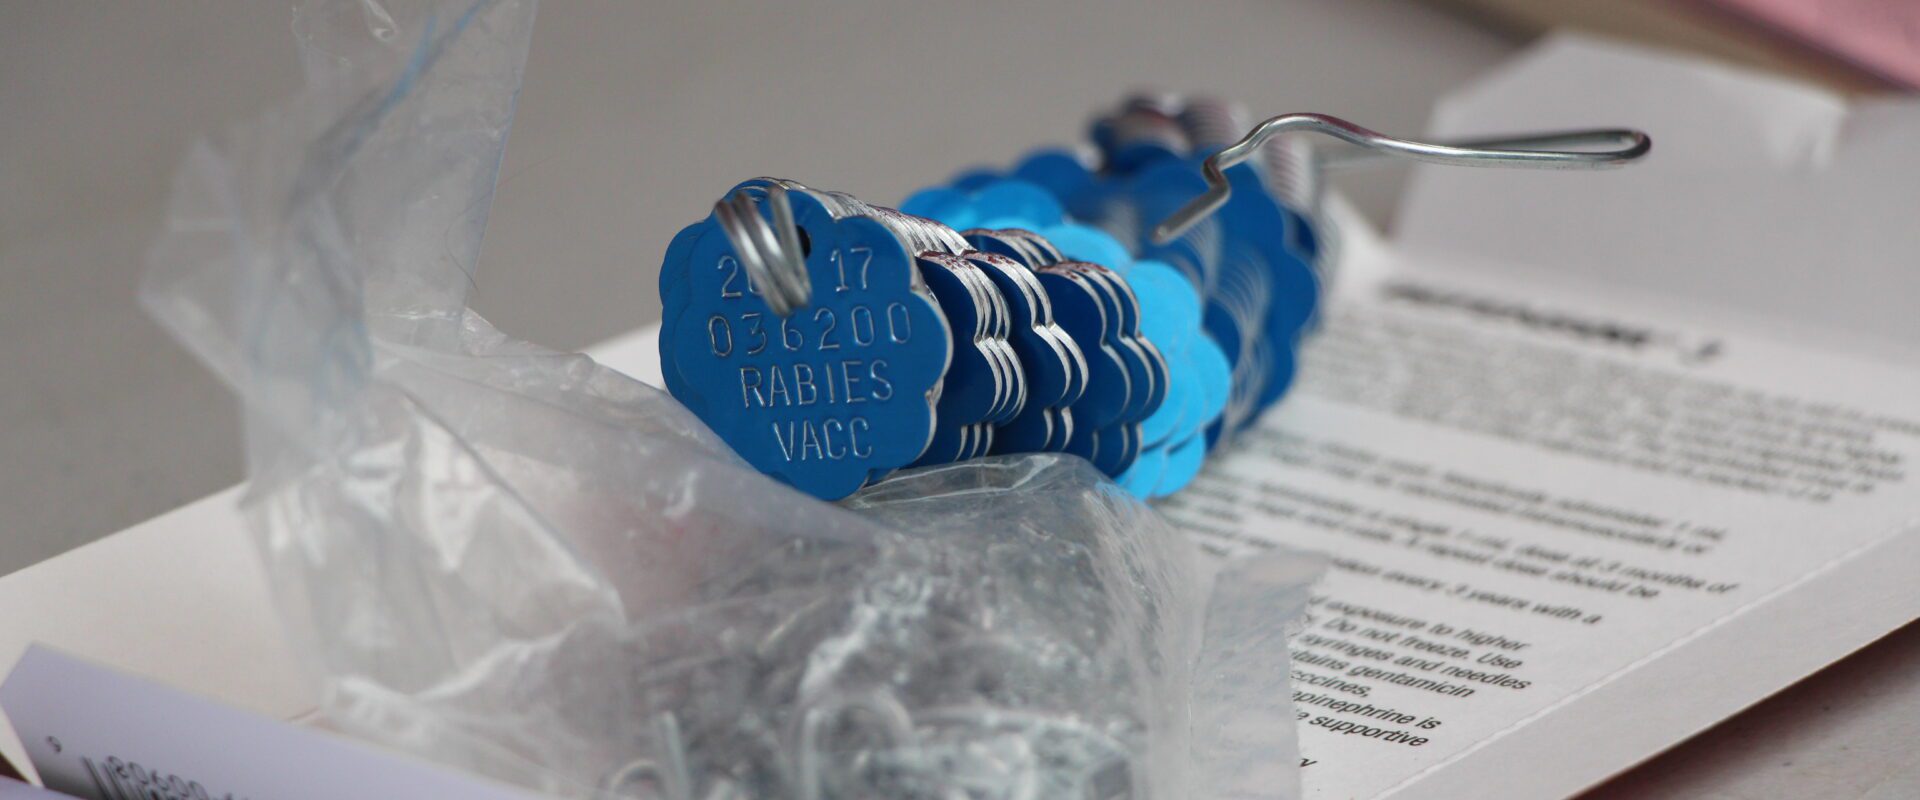 Blue rabies tags